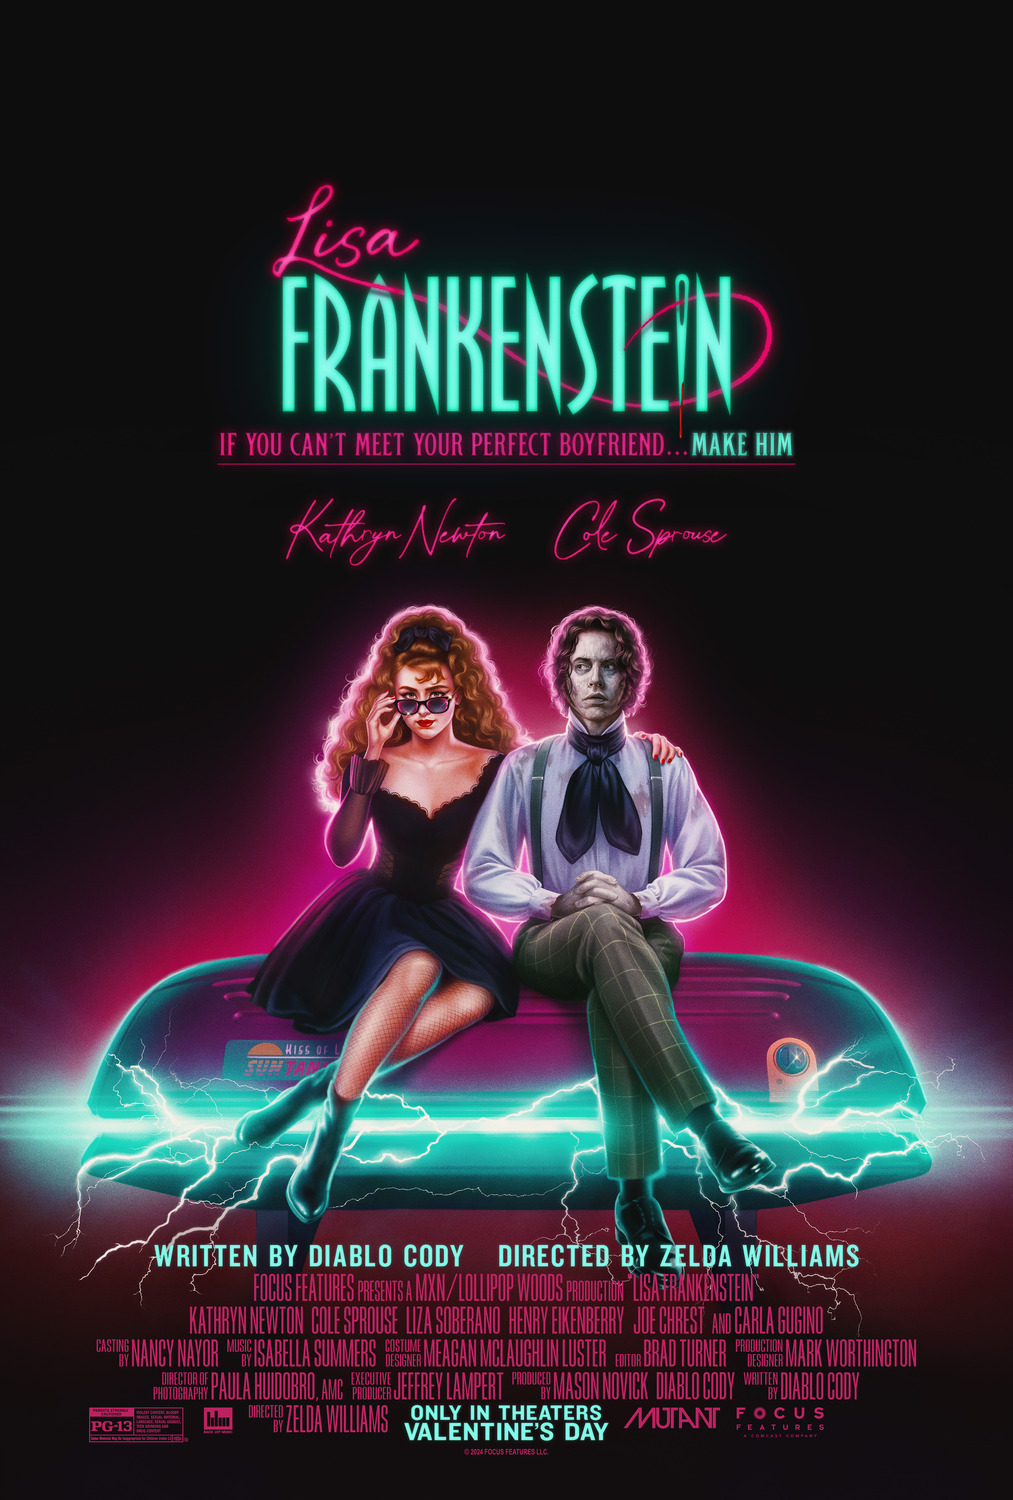 Extra Large Movie Poster Image for Lisa Frankenstein (#2 of 3)